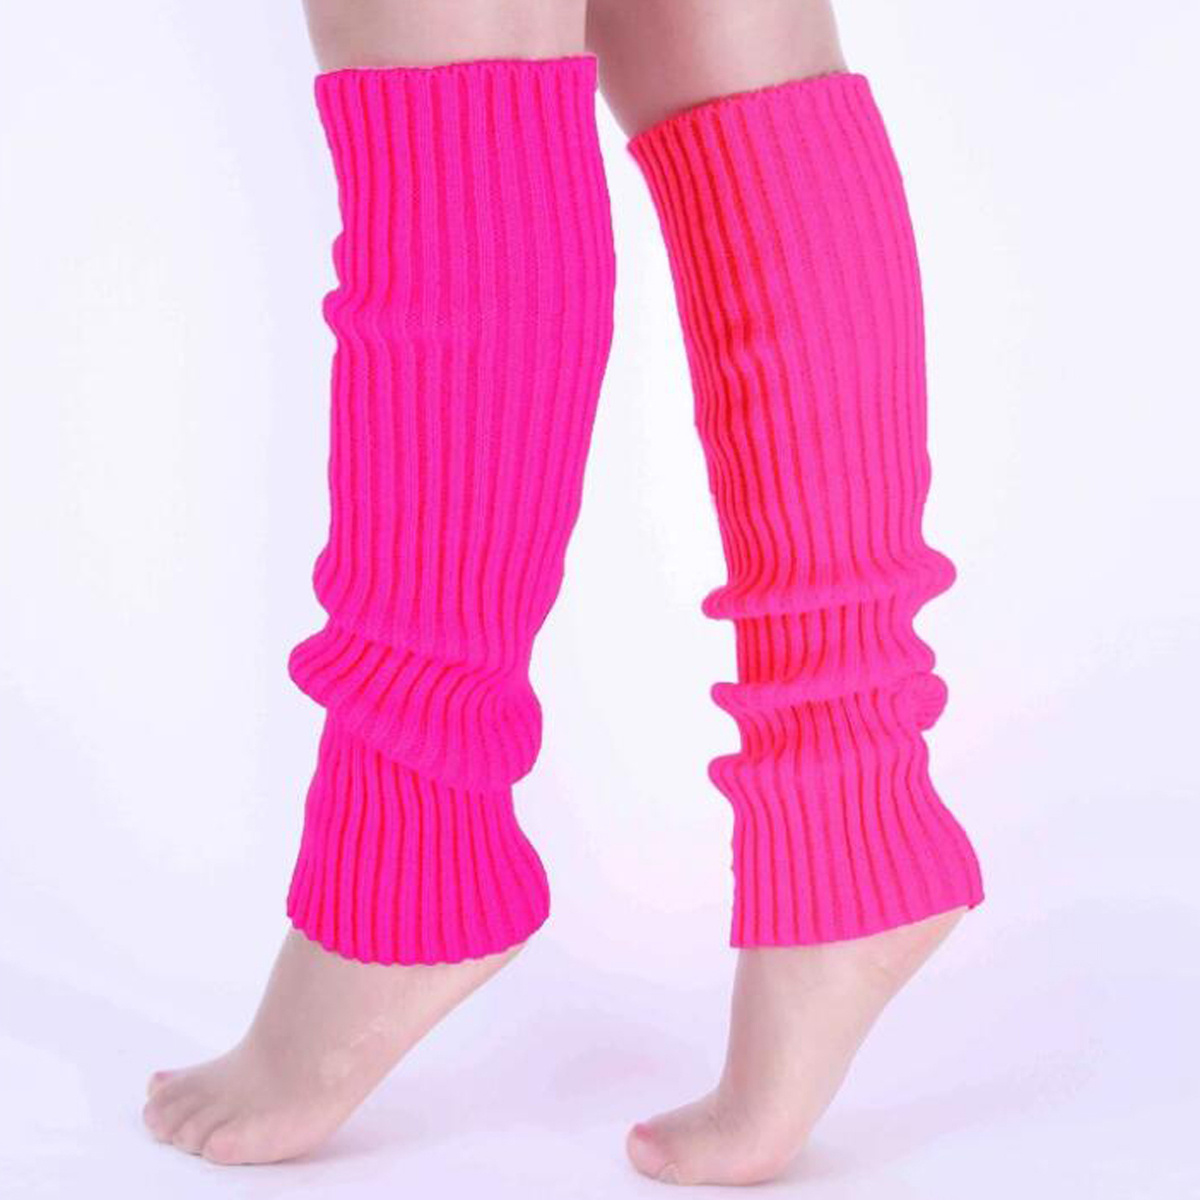 Retro Dance Knitted Leg Warmers [FREE Knitting Pattern]